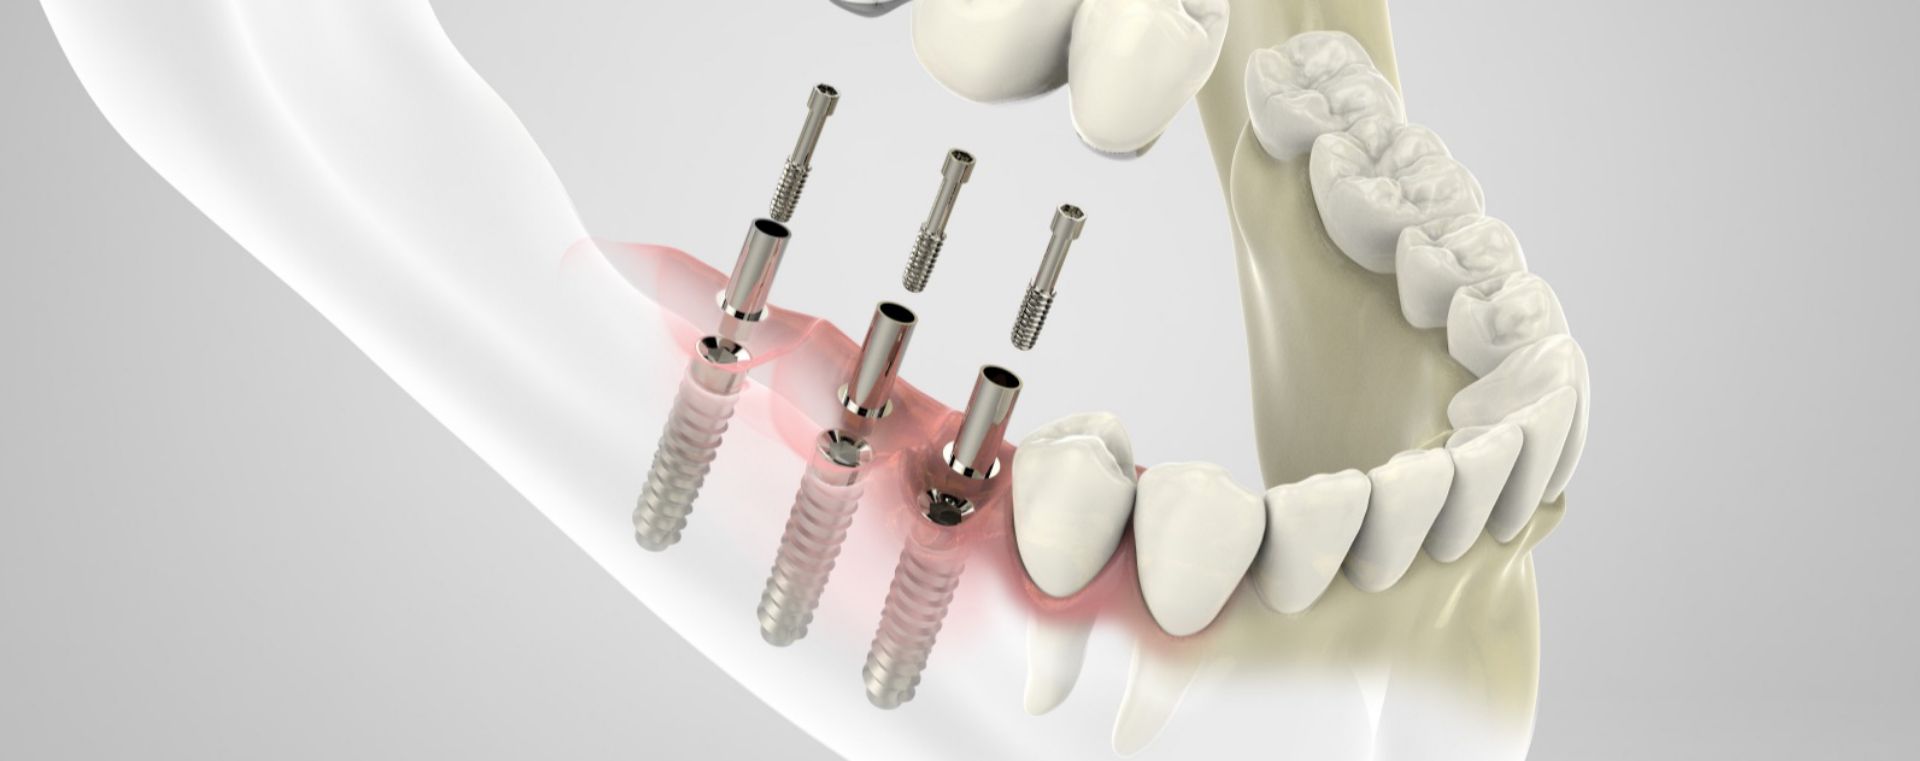 Clinica Odontoiatrica Mancini - implantologia